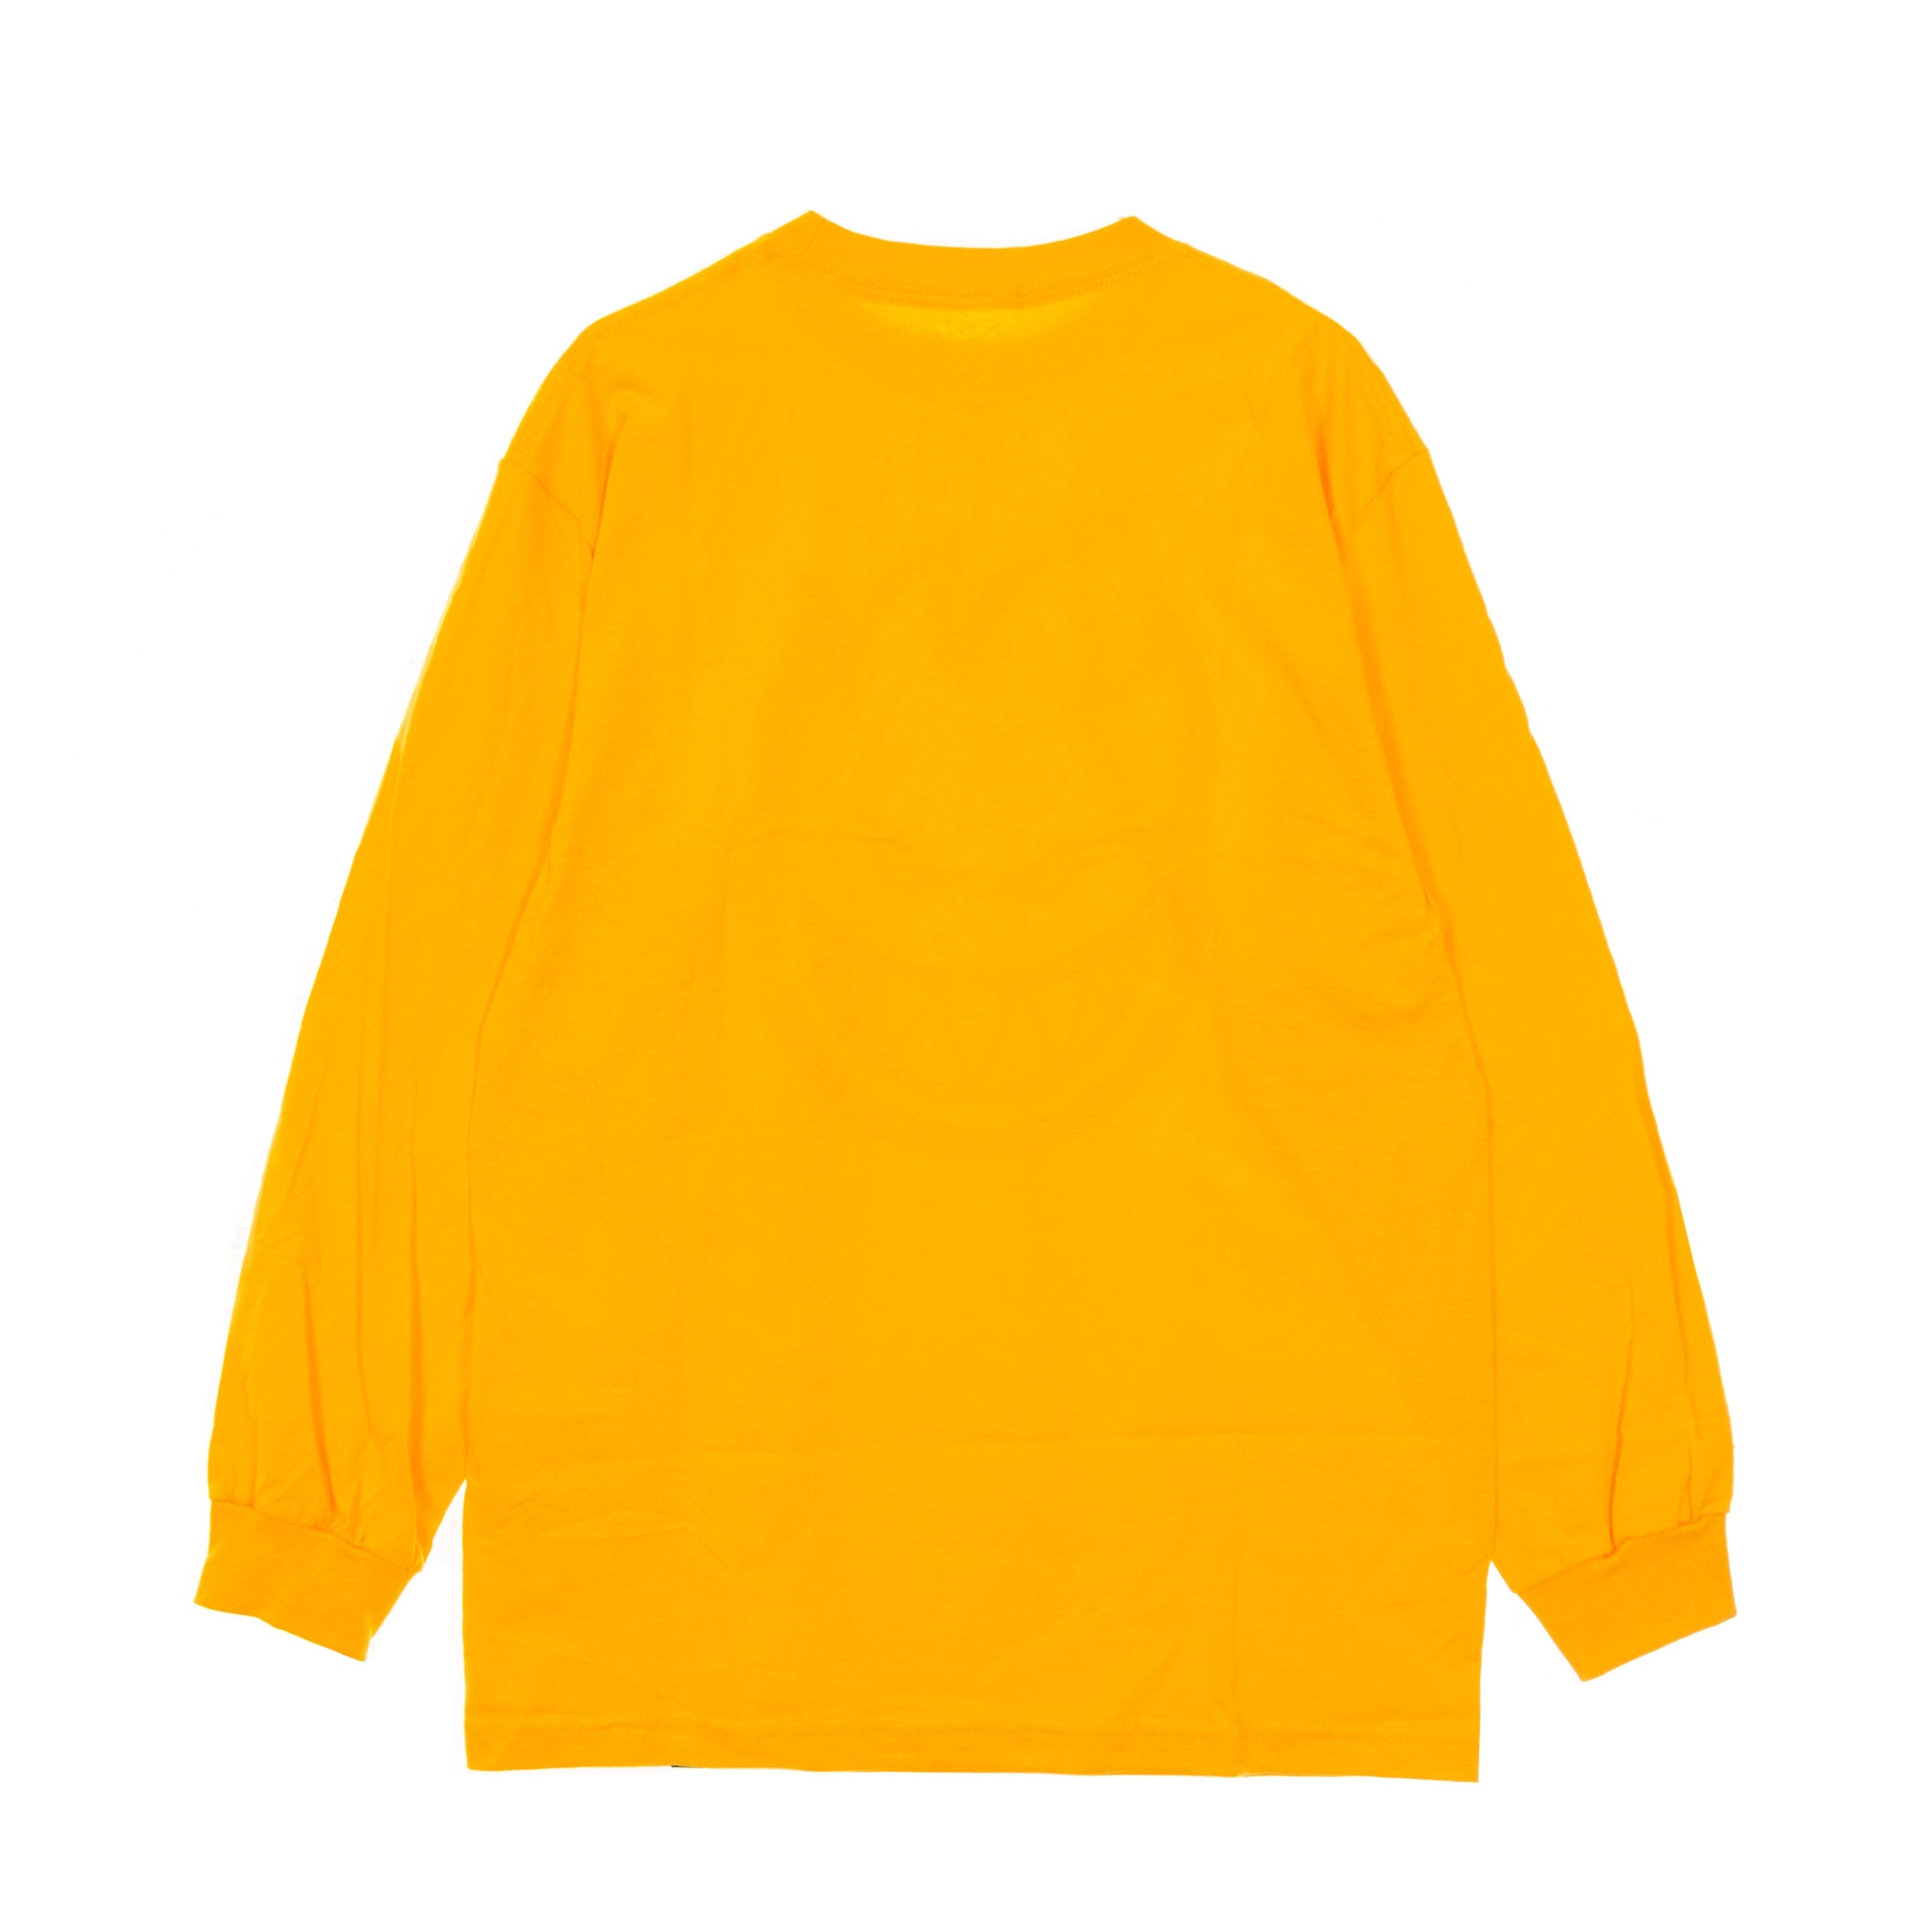 Bighead Men's Long Sleeve T-Shirt L/s Gold/red